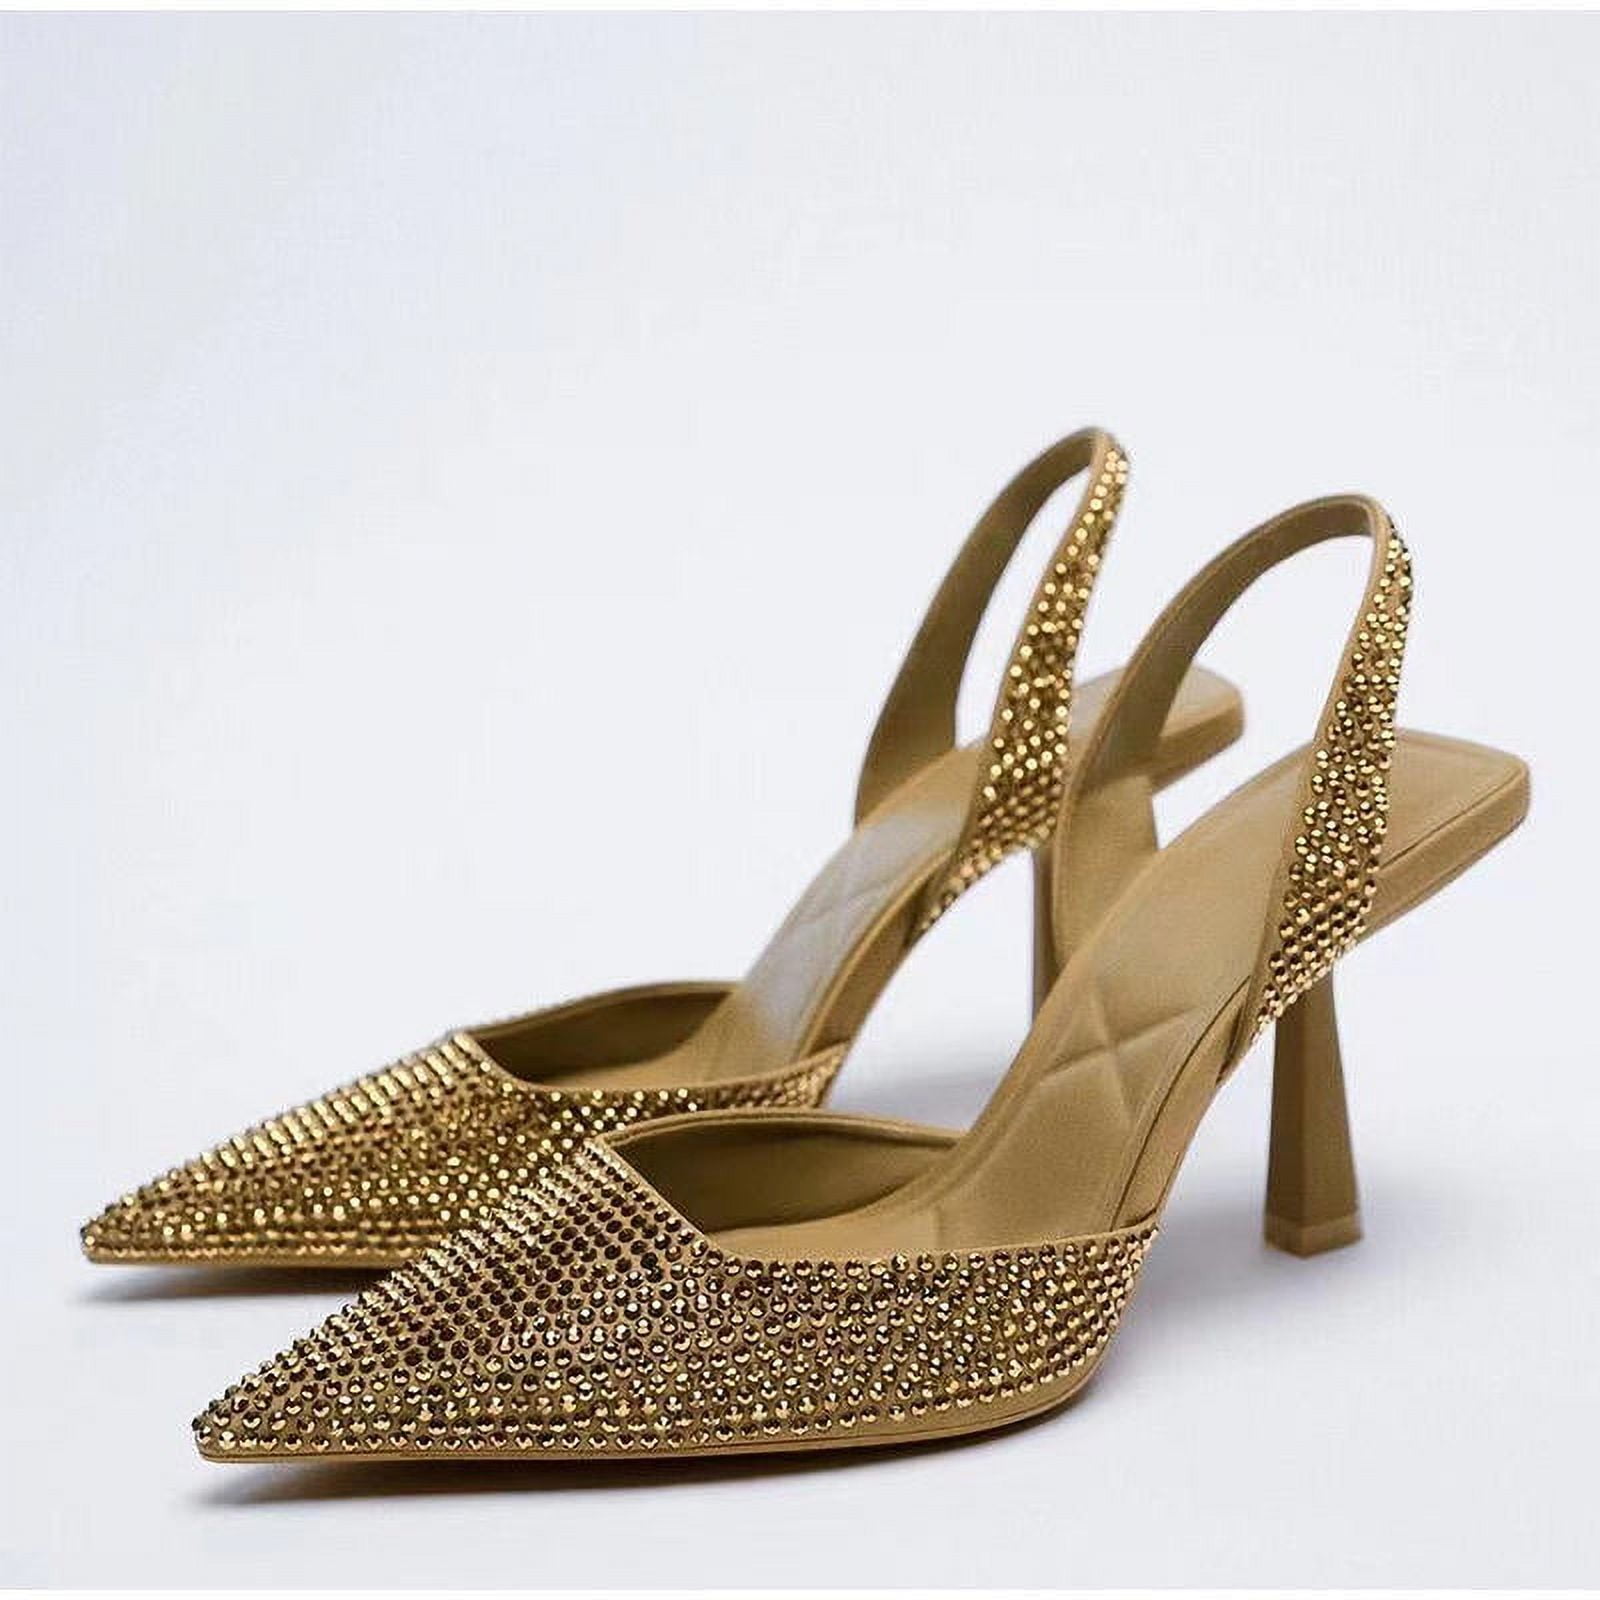 Khadim Brown Pump Heels Formal Shoe for Women